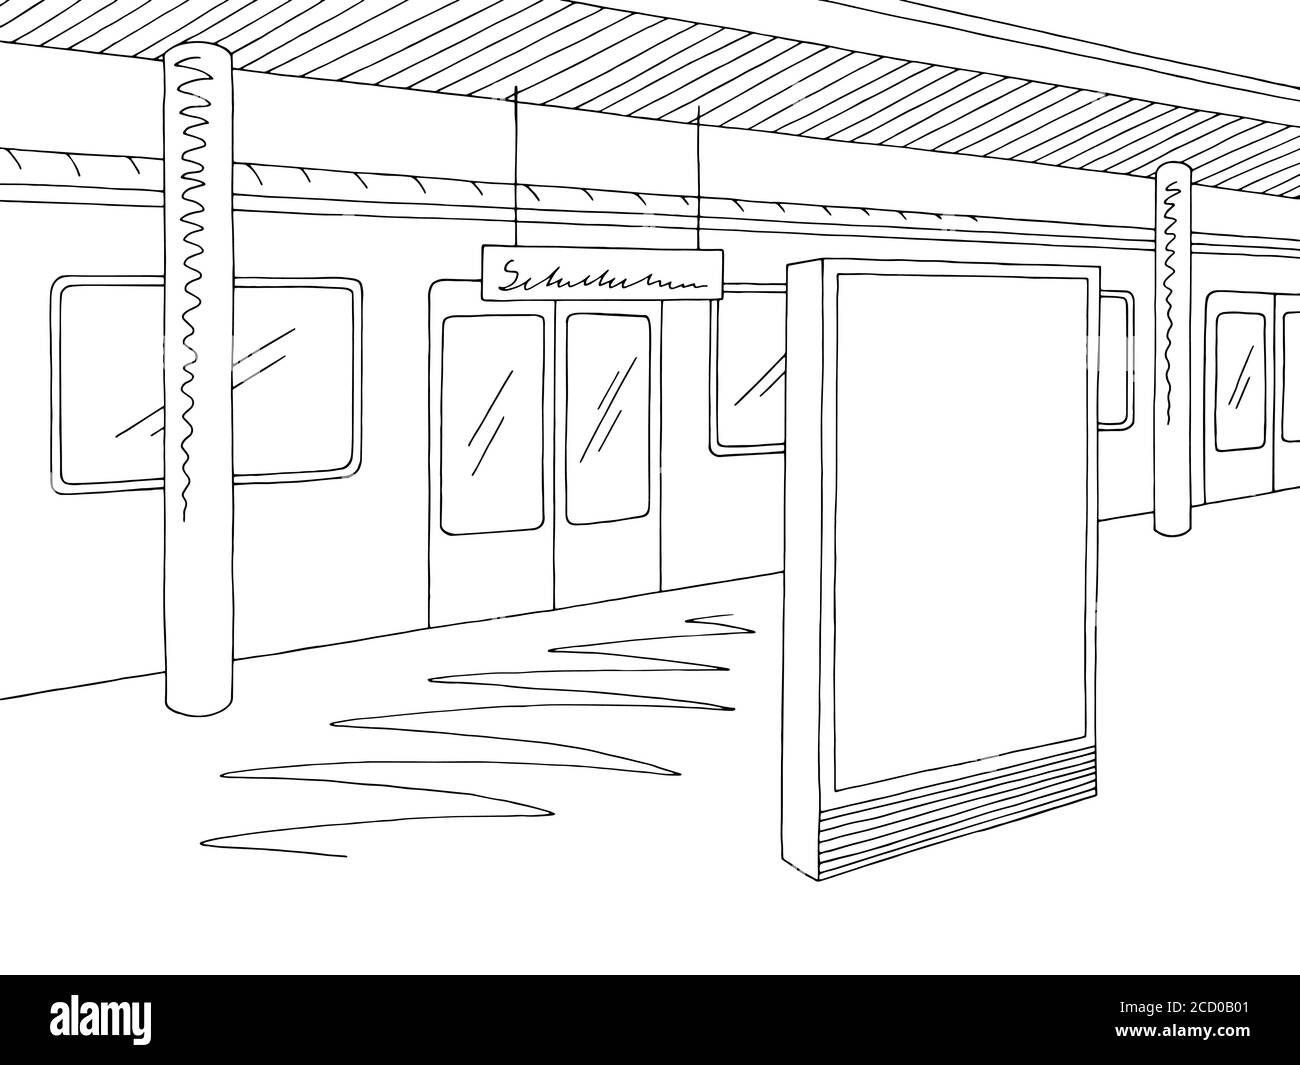 Bahnhofsbahnsteig Zug Plakatwand Grafik schwarz weiß Skizze Illustration vektor Stock Vektor